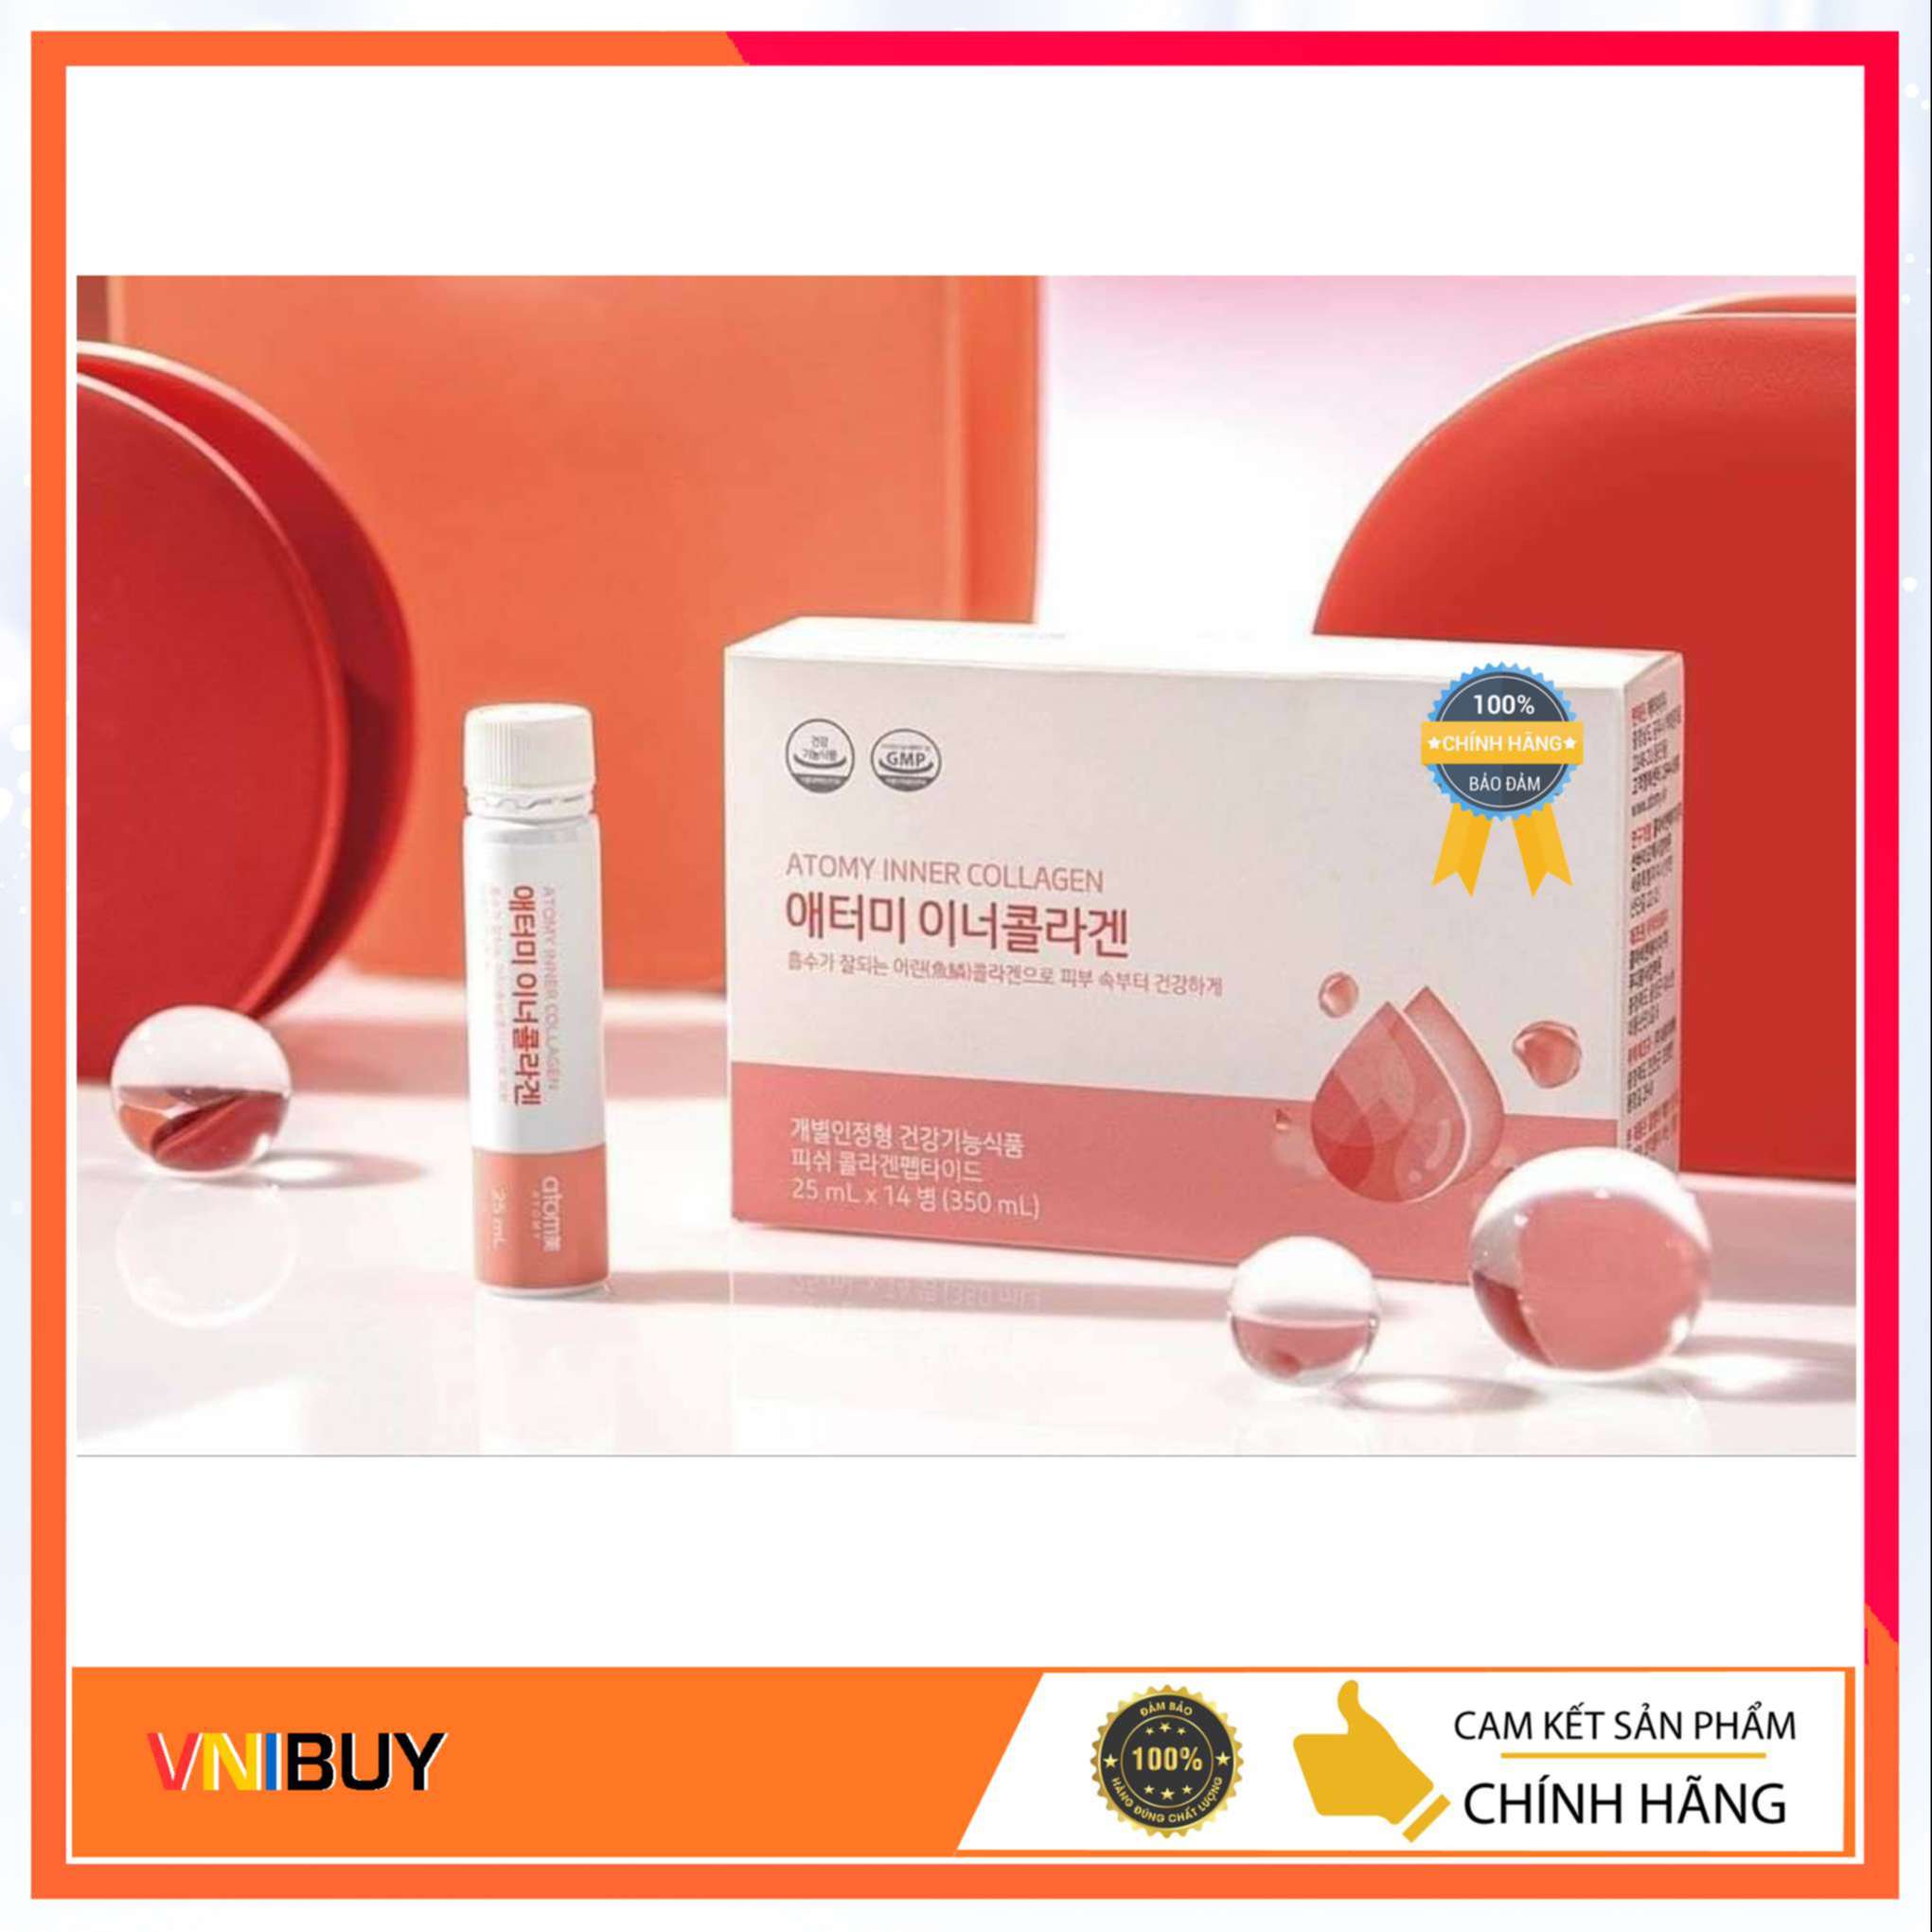 nuoc-uong-collagen-chong-lao-hoa-dep-da-han-quoc-atomy-inner-collagen-1-hop-14-ong-25ml